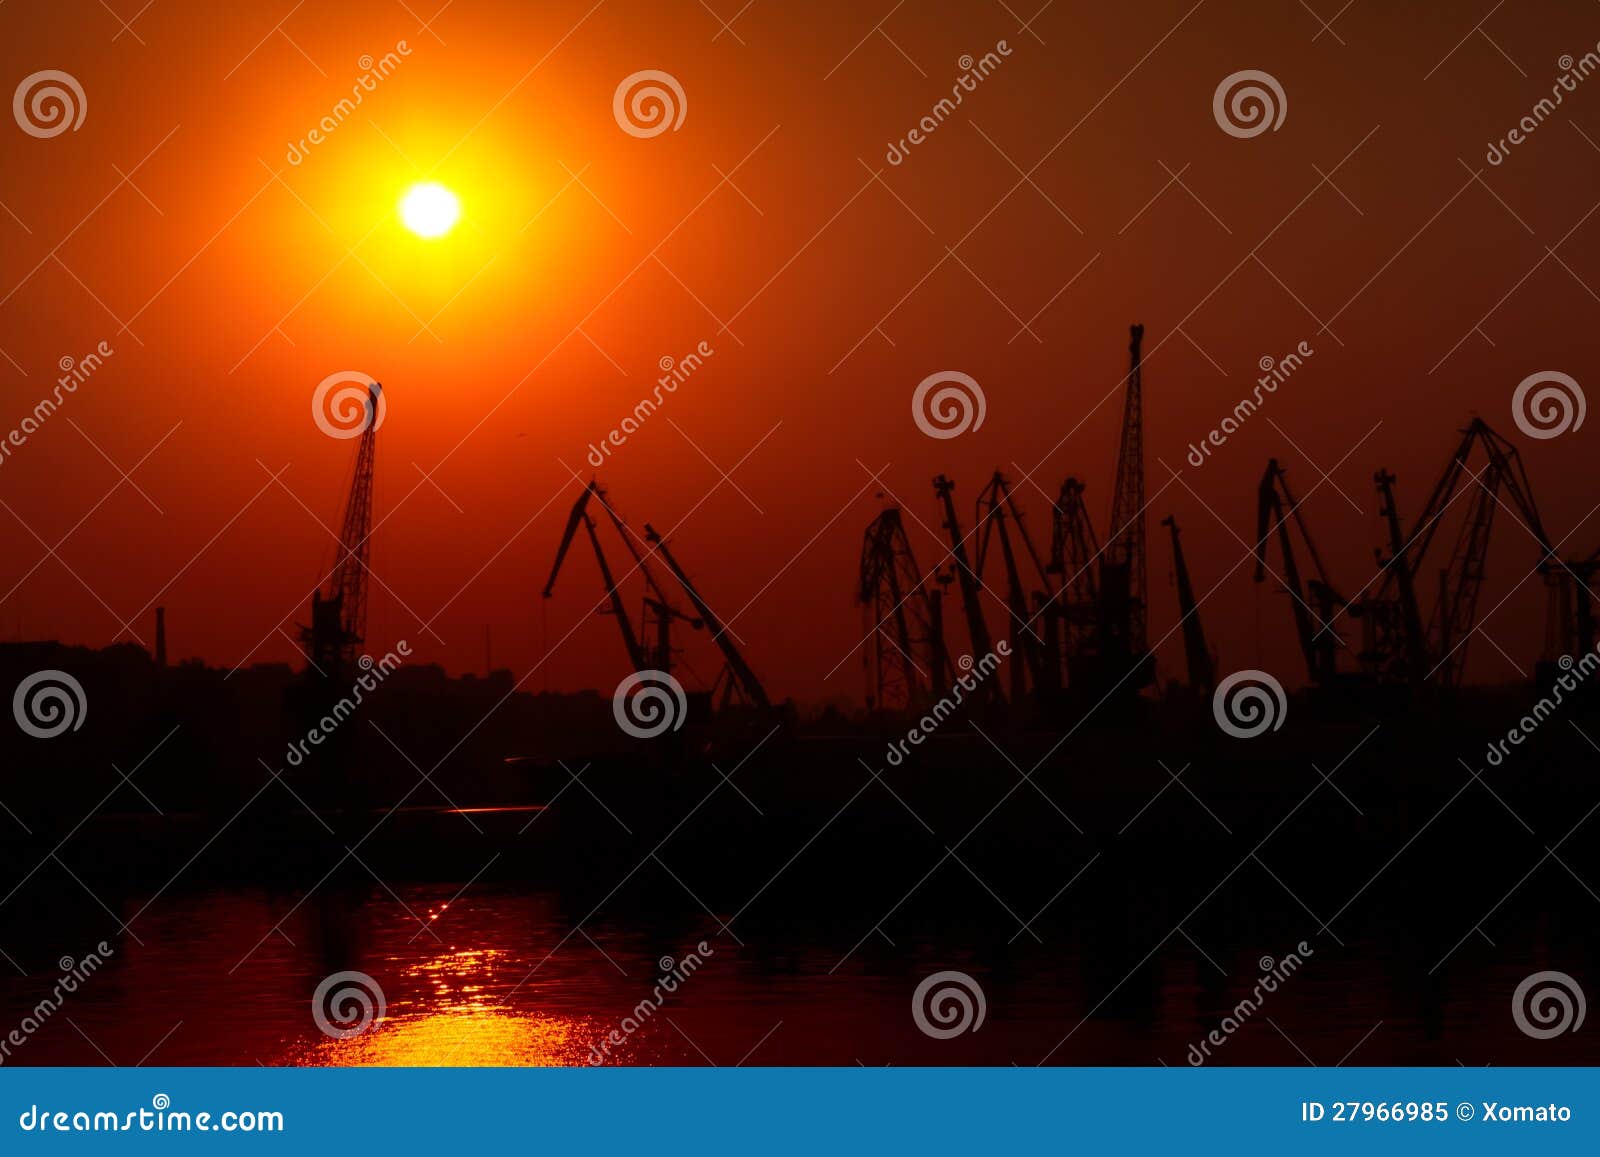 hoisting cranes on sunset